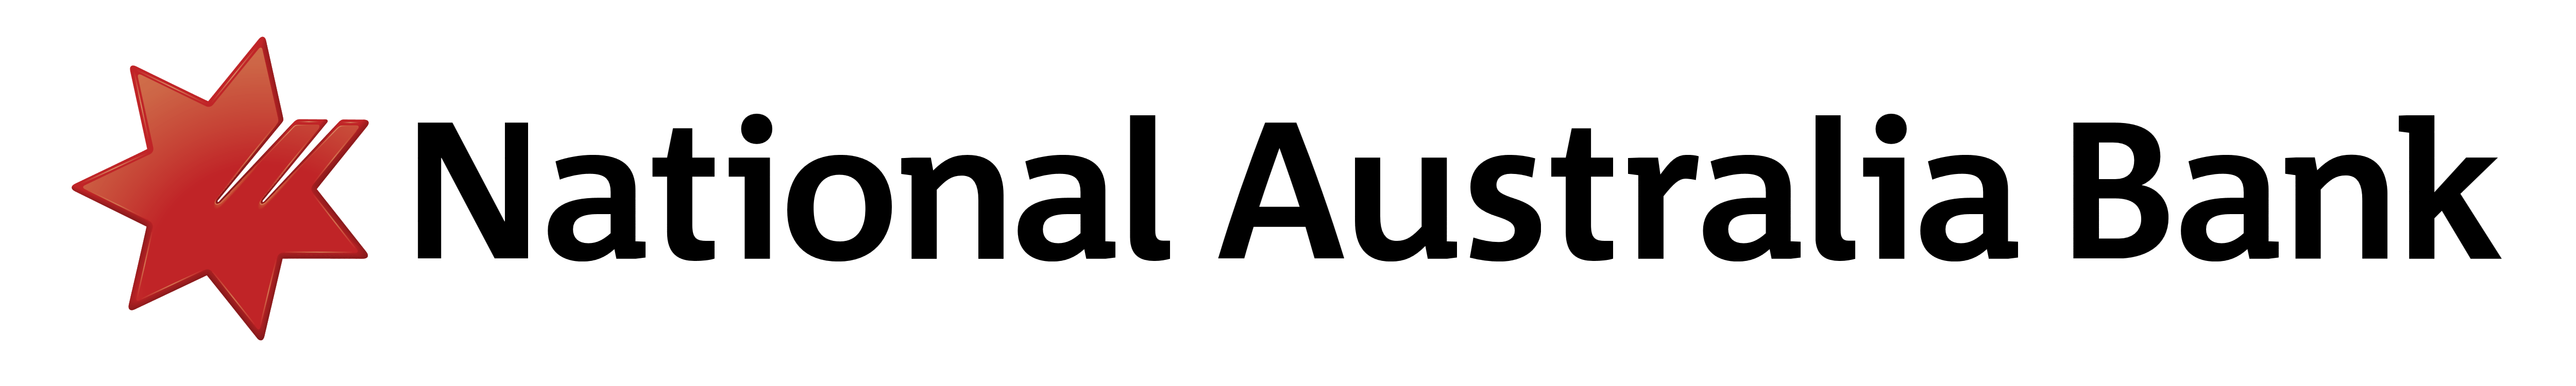 Nationalaustraliabank Logo - NAB, National Australia Bank – Logos Download